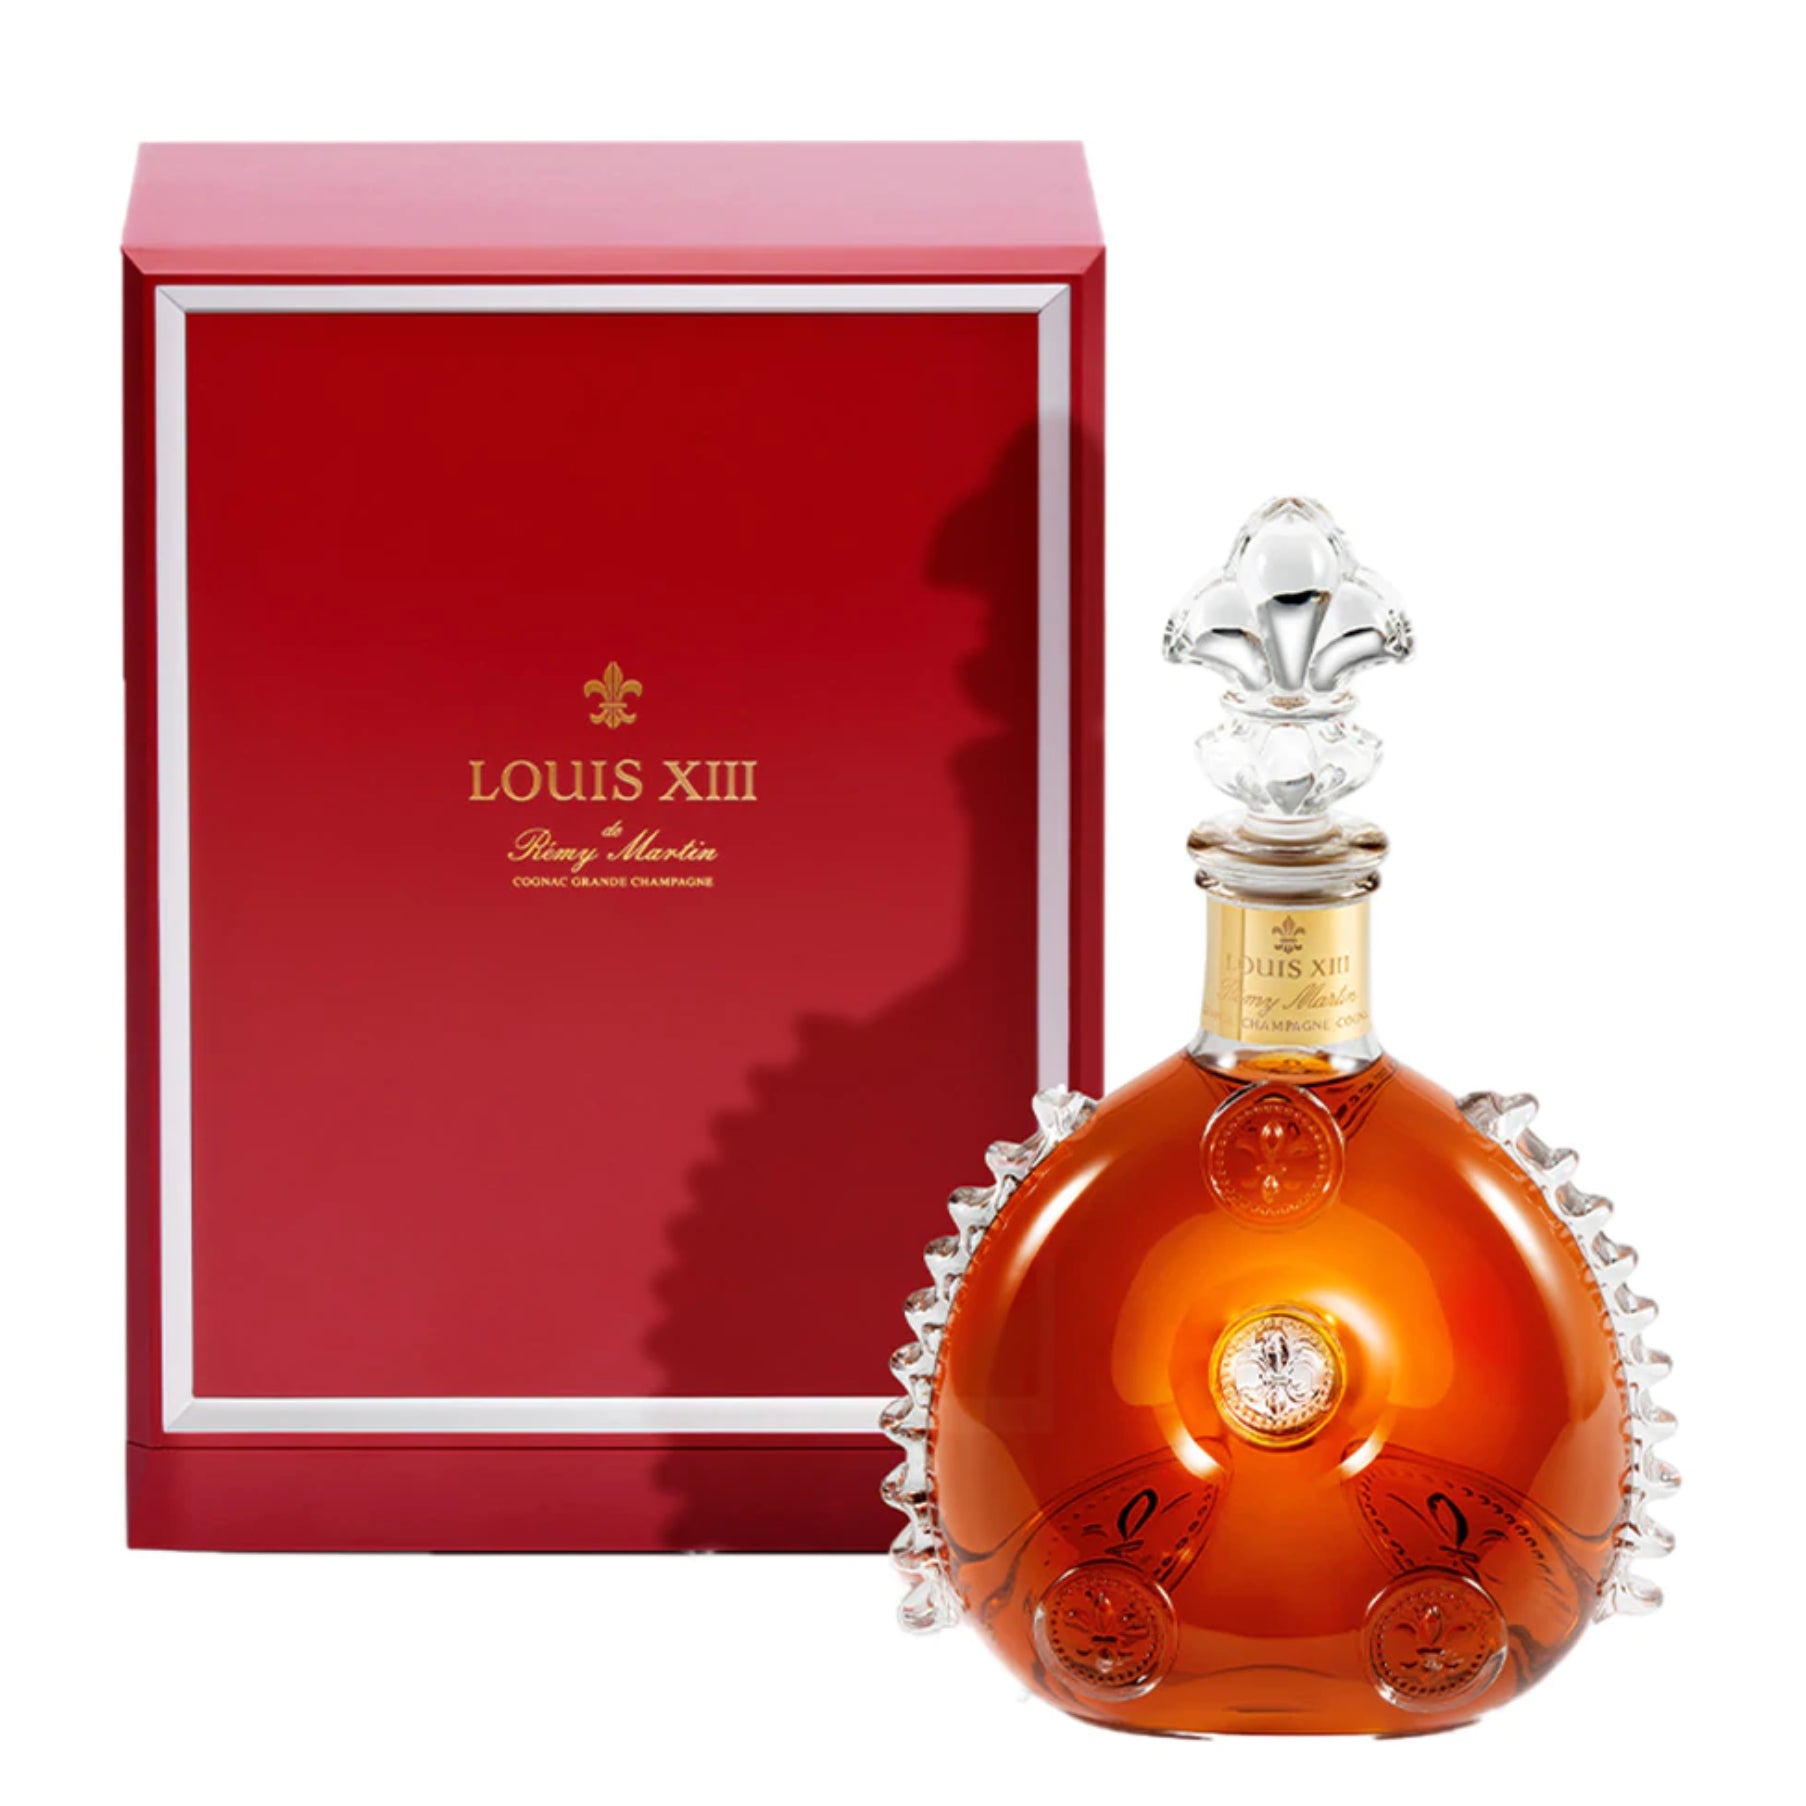 Buy Remy Martin Louis XIII Cognac - 750ML – Wine Chateau